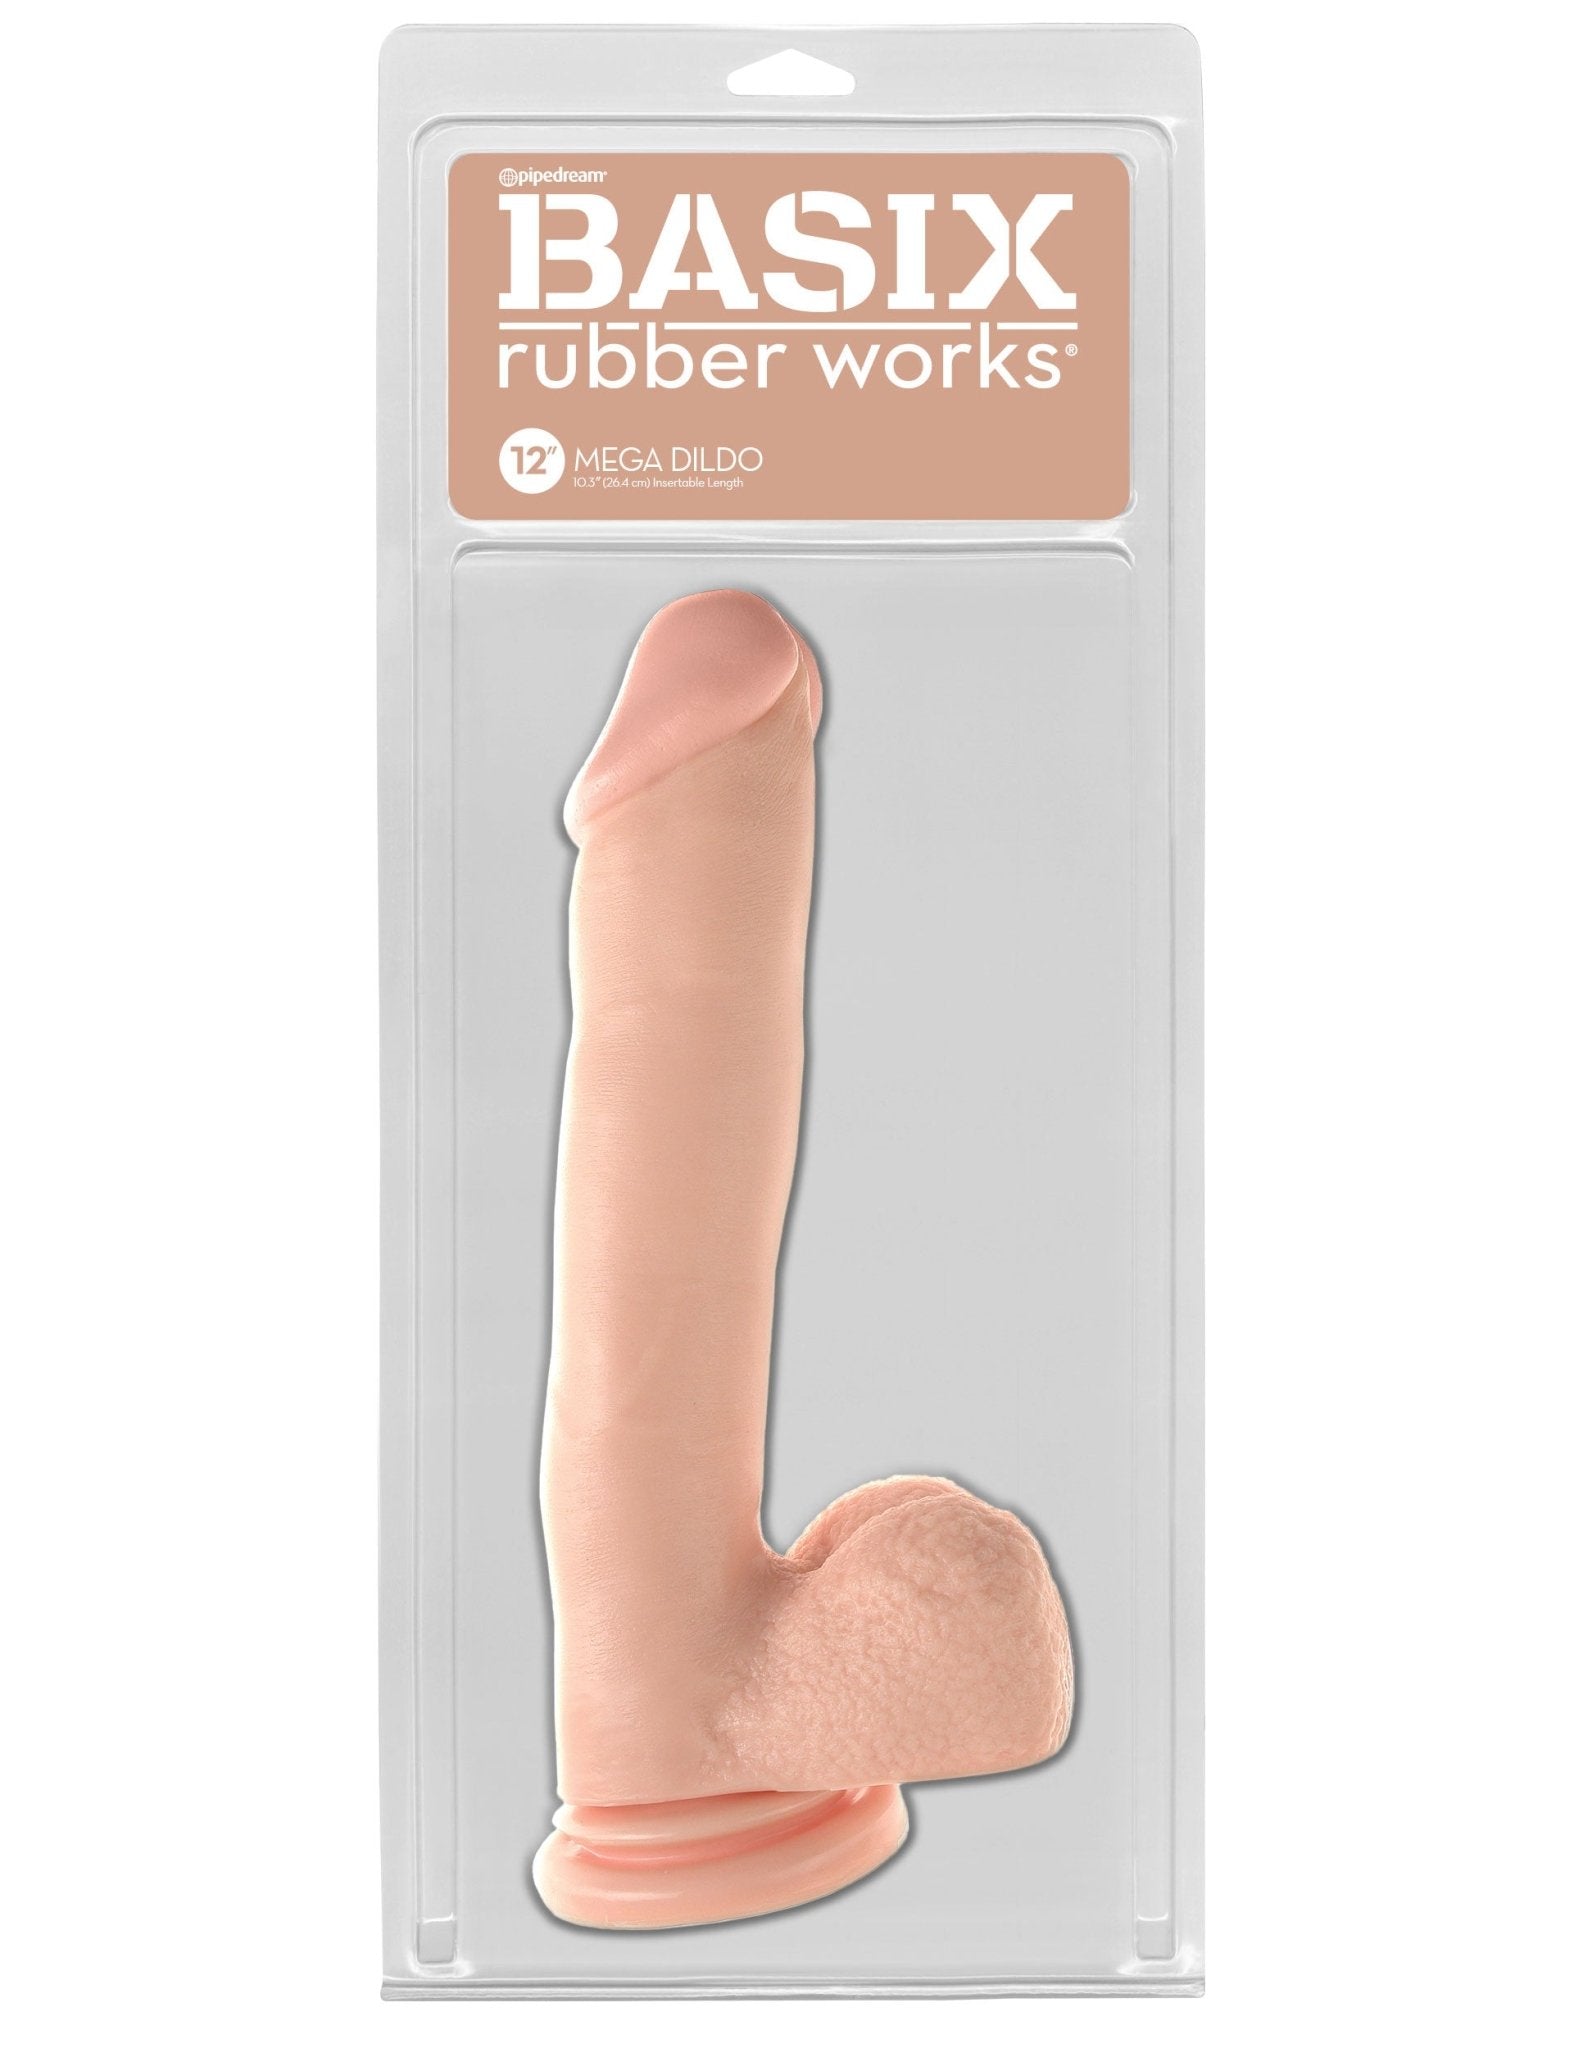 Basix Rubber Works 12-Inch Mega Dildo